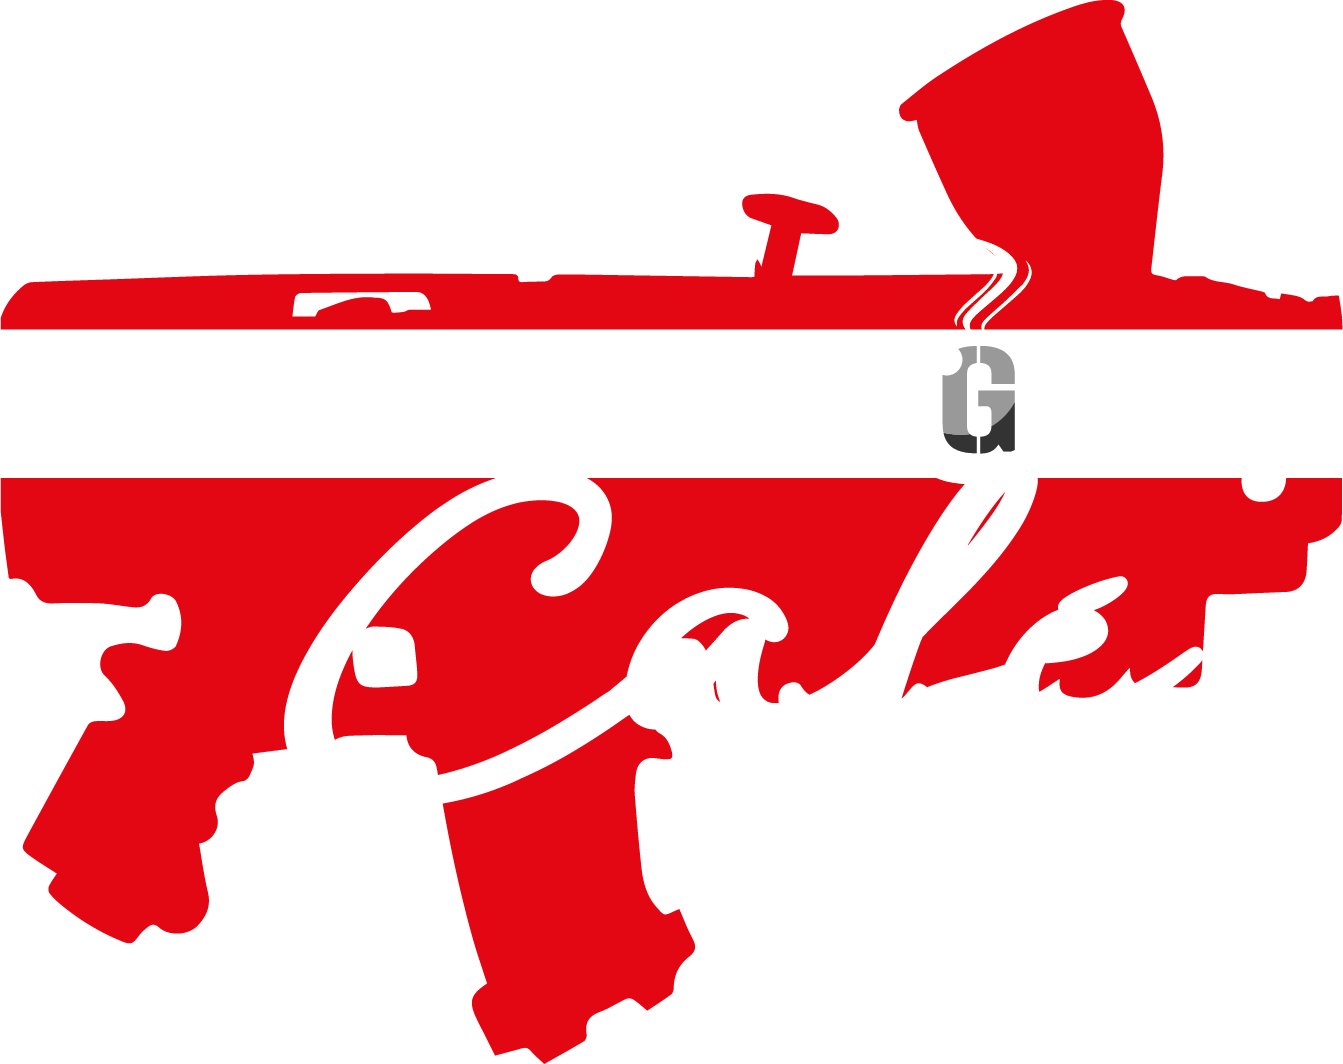 French Wargame Café